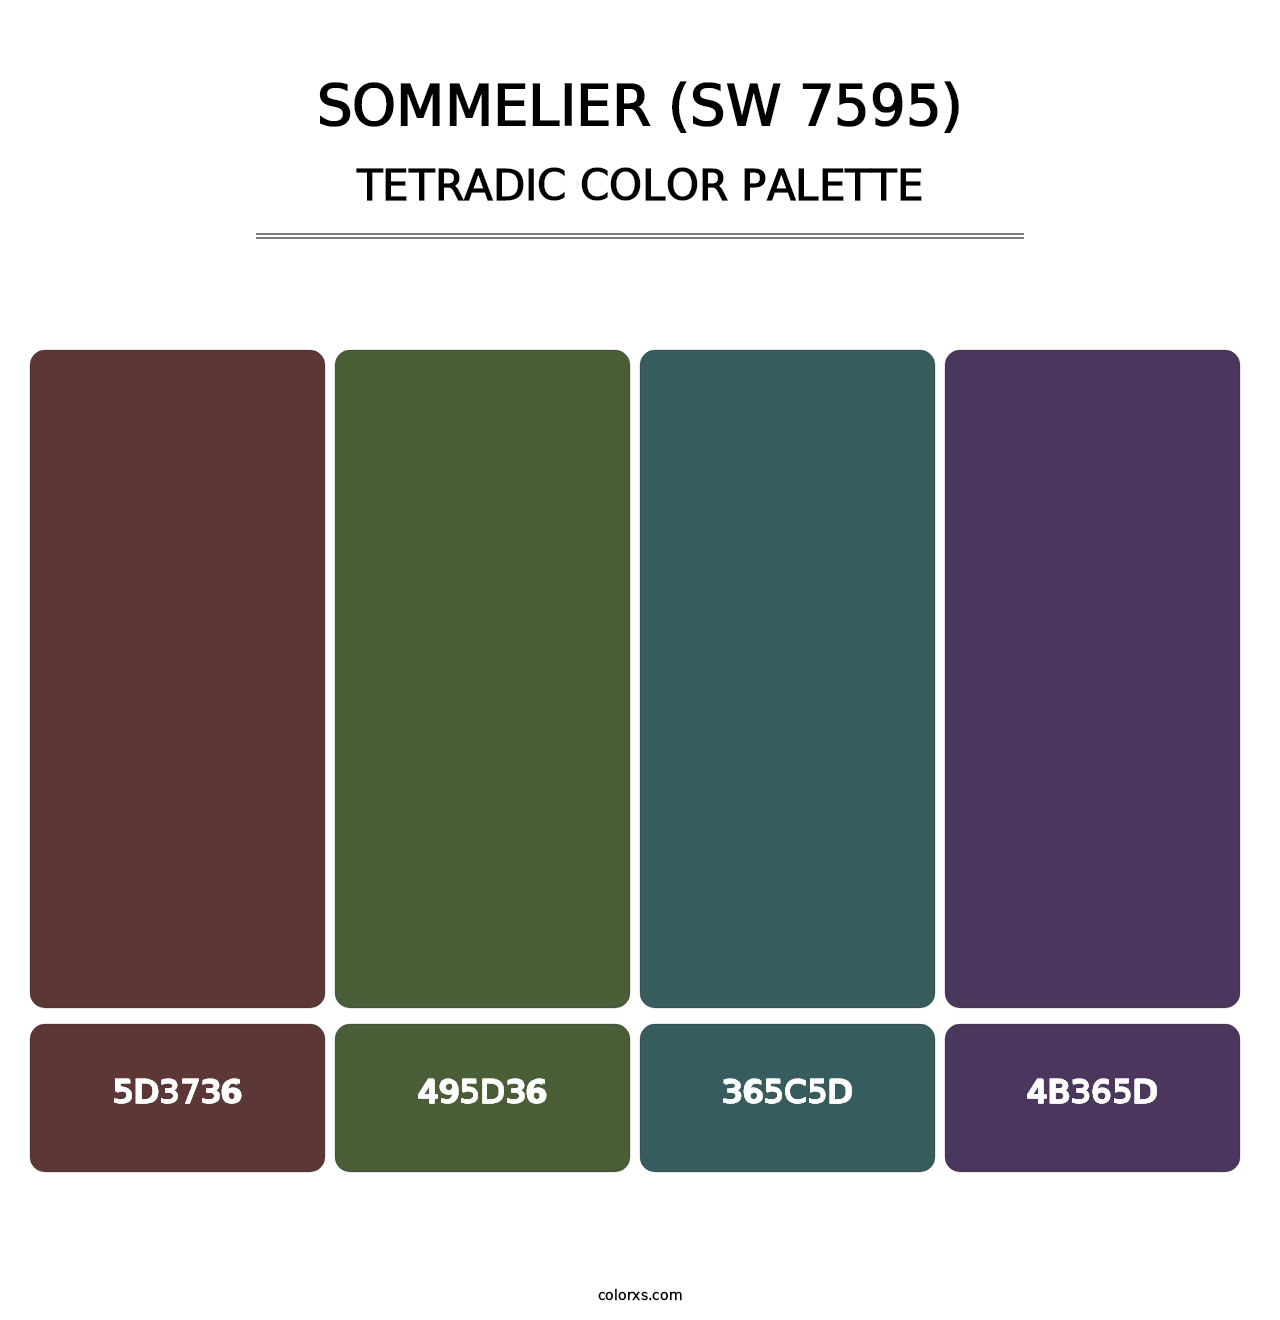 Sommelier (SW 7595) - Tetradic Color Palette